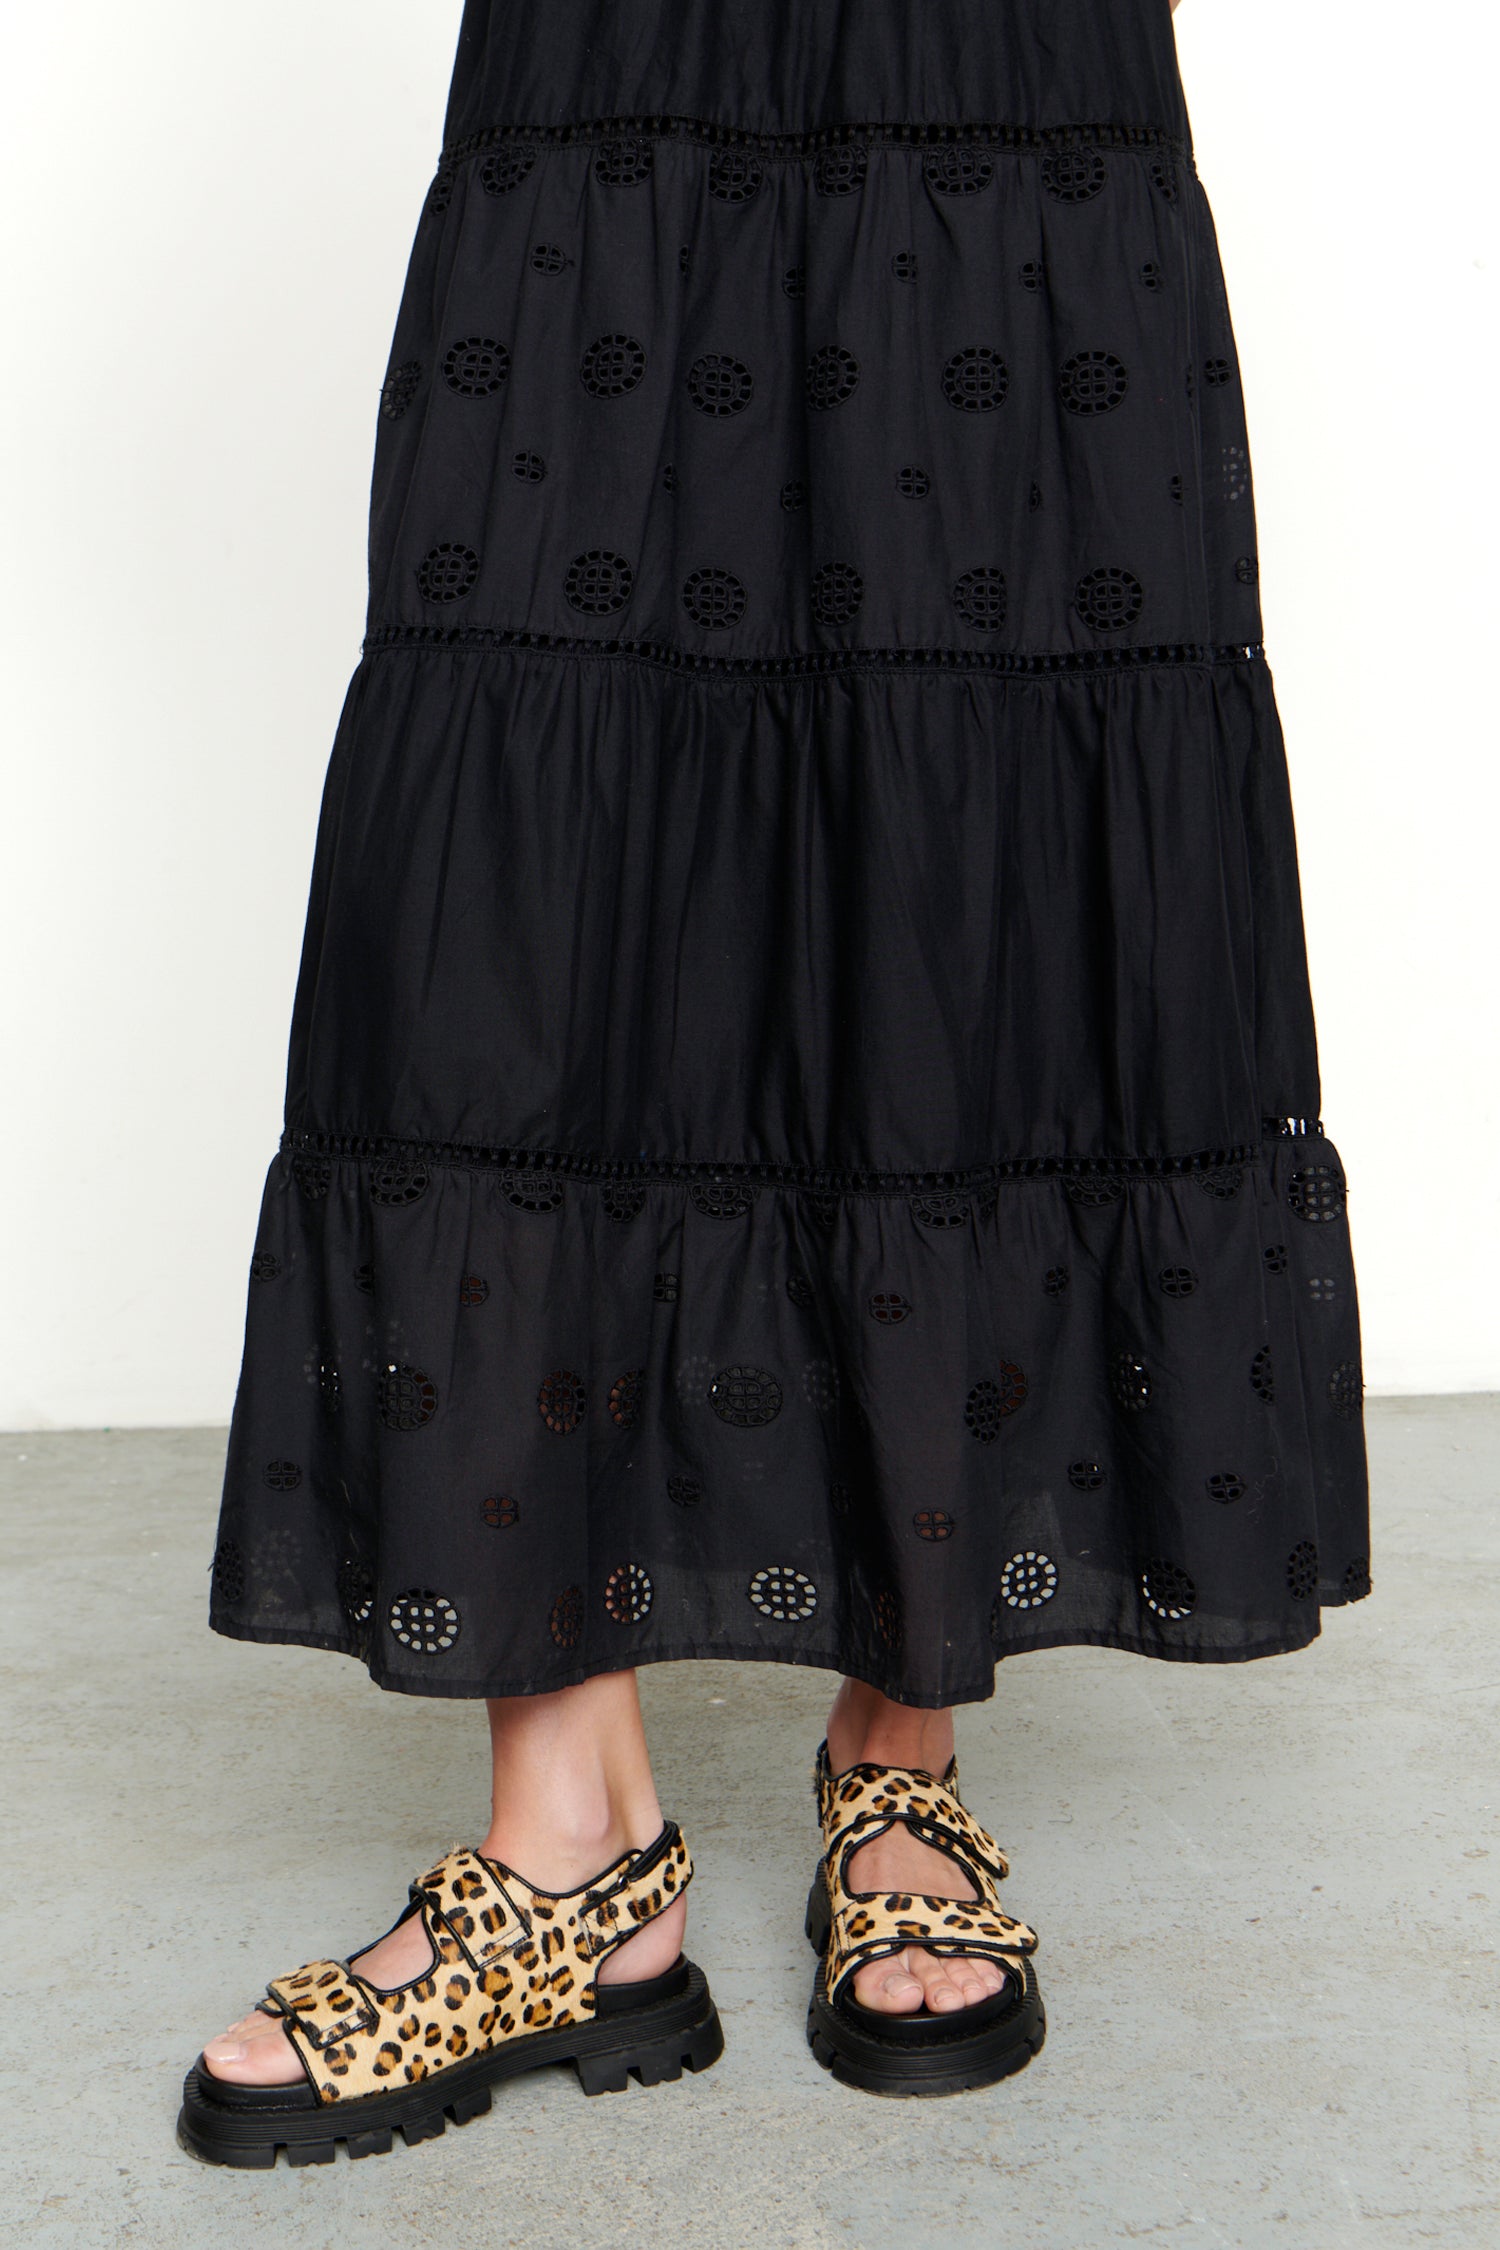 Model wearing Black Broderie Smock Dress standing facing the camera 